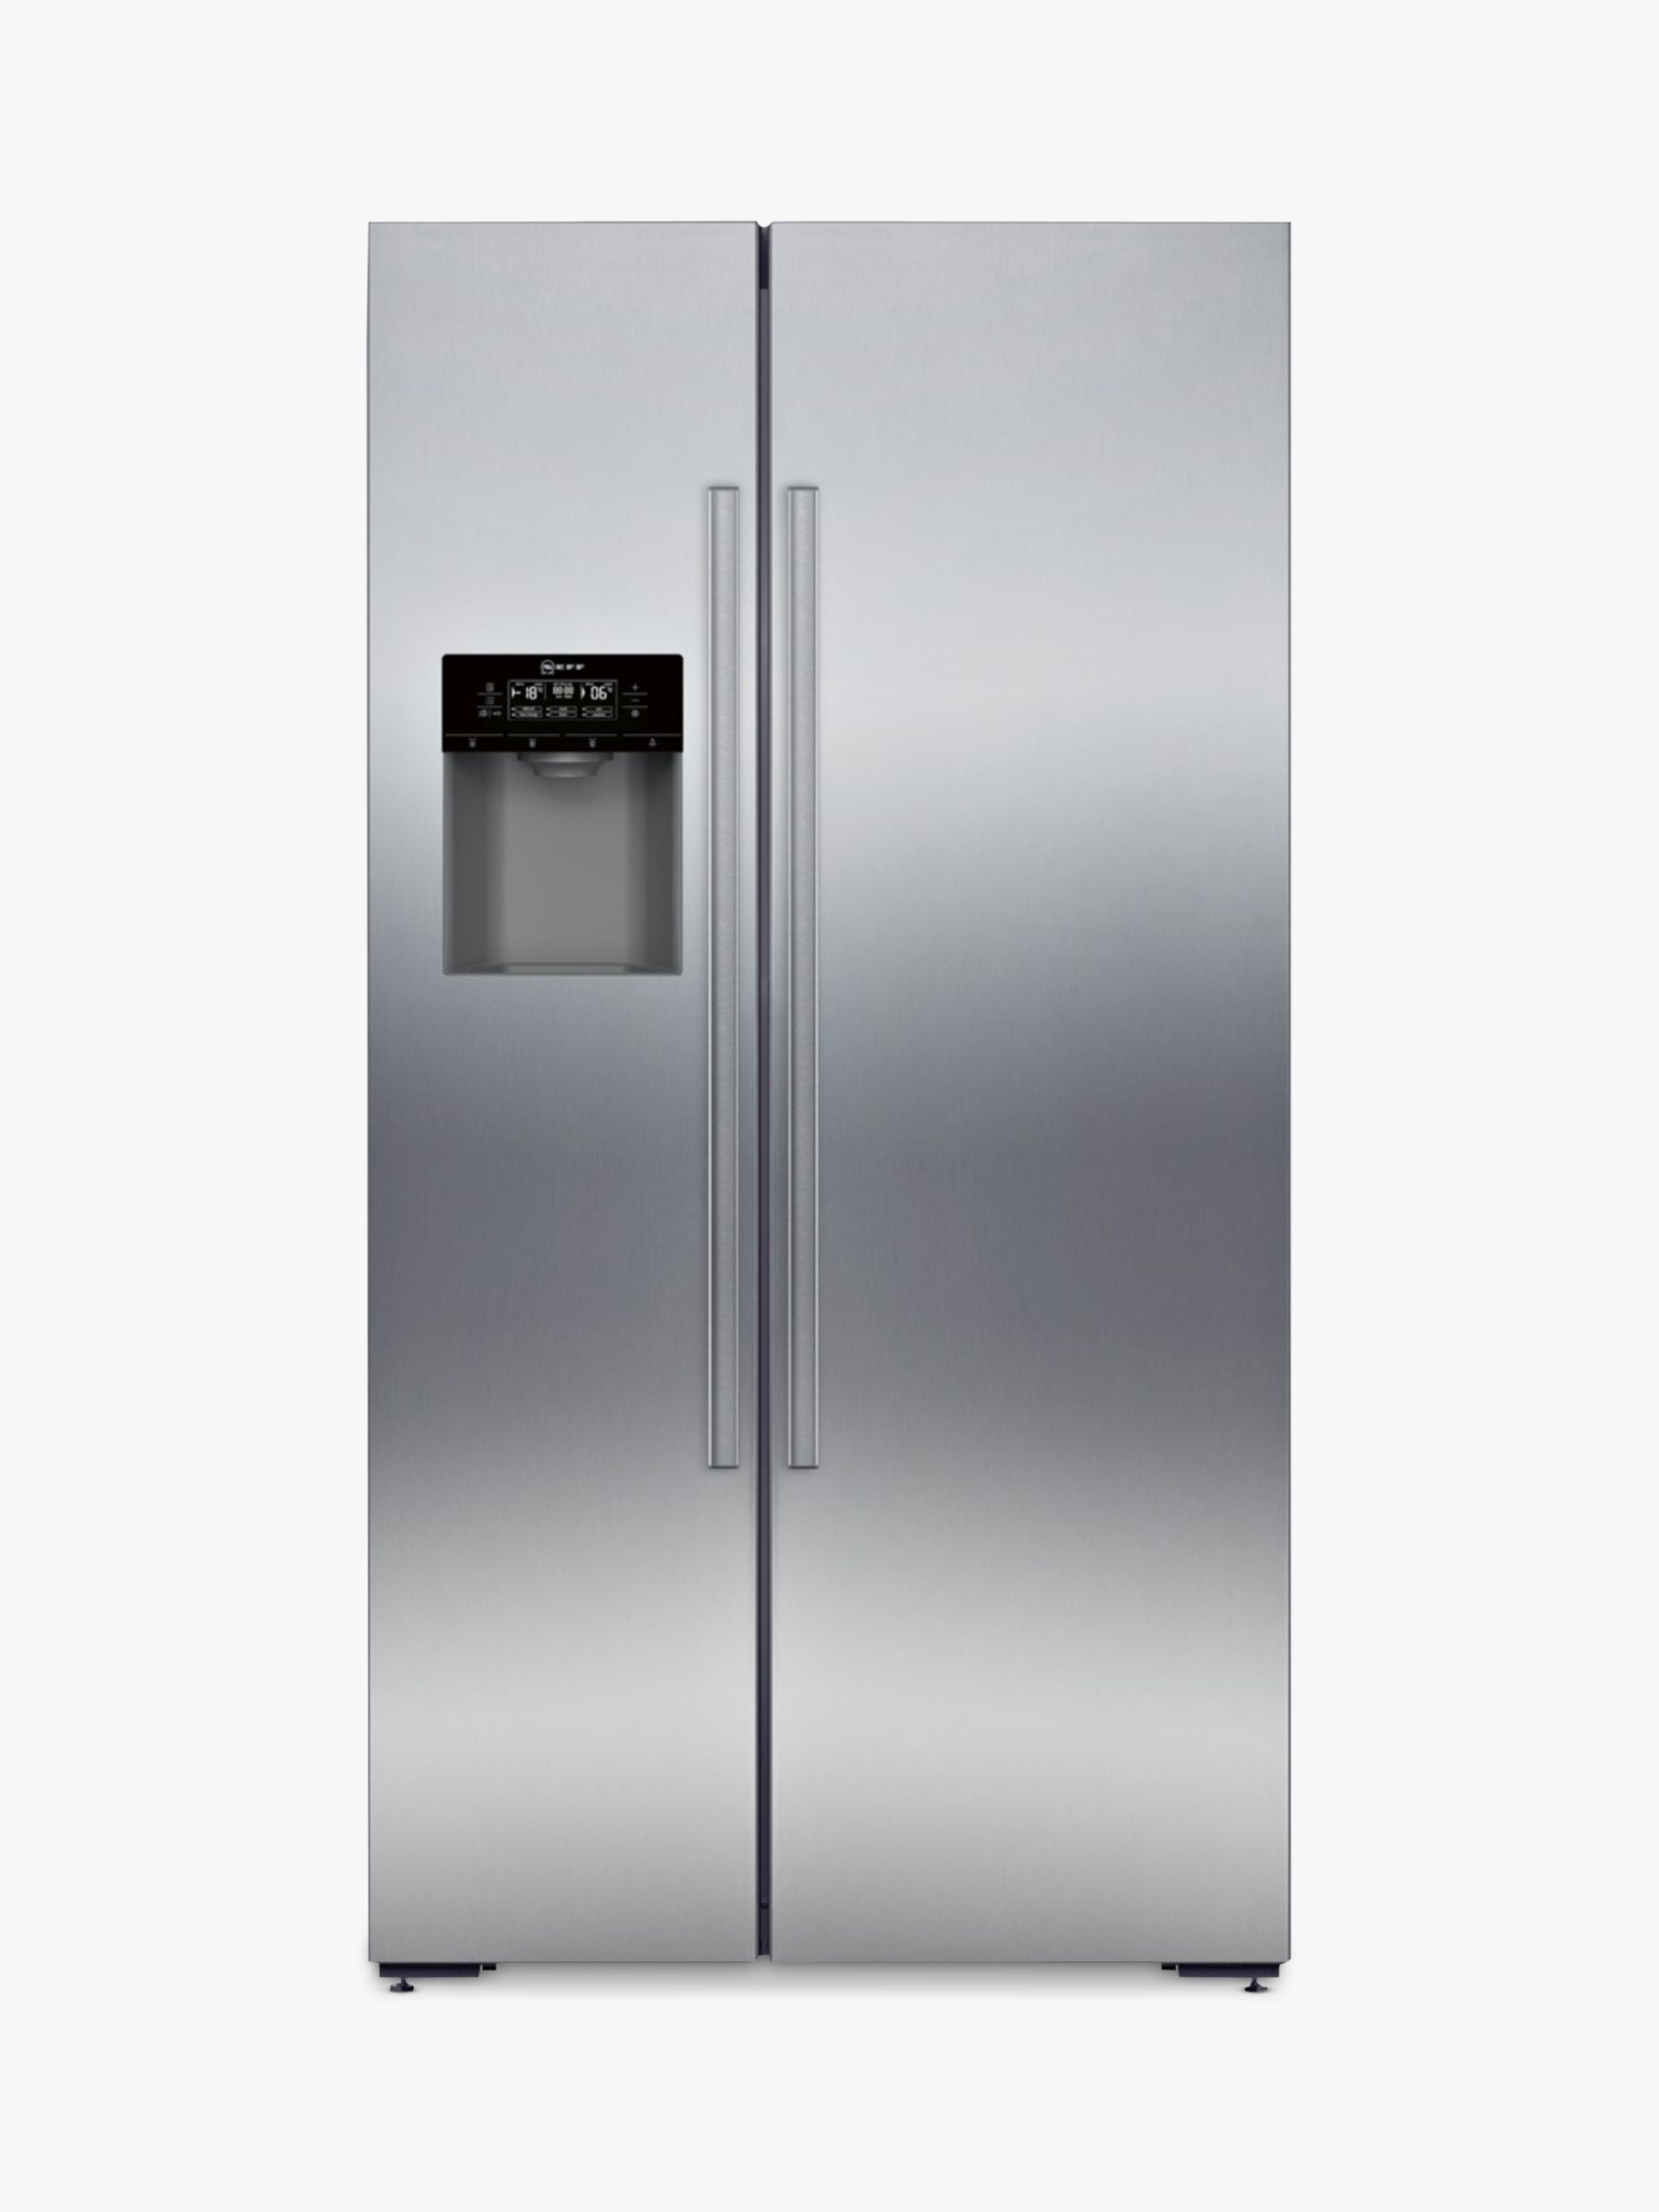 Neff KA3923I20G American Style Fridge Freezer, A+ Energy Rating, 90cm Wide, Stainless Steel